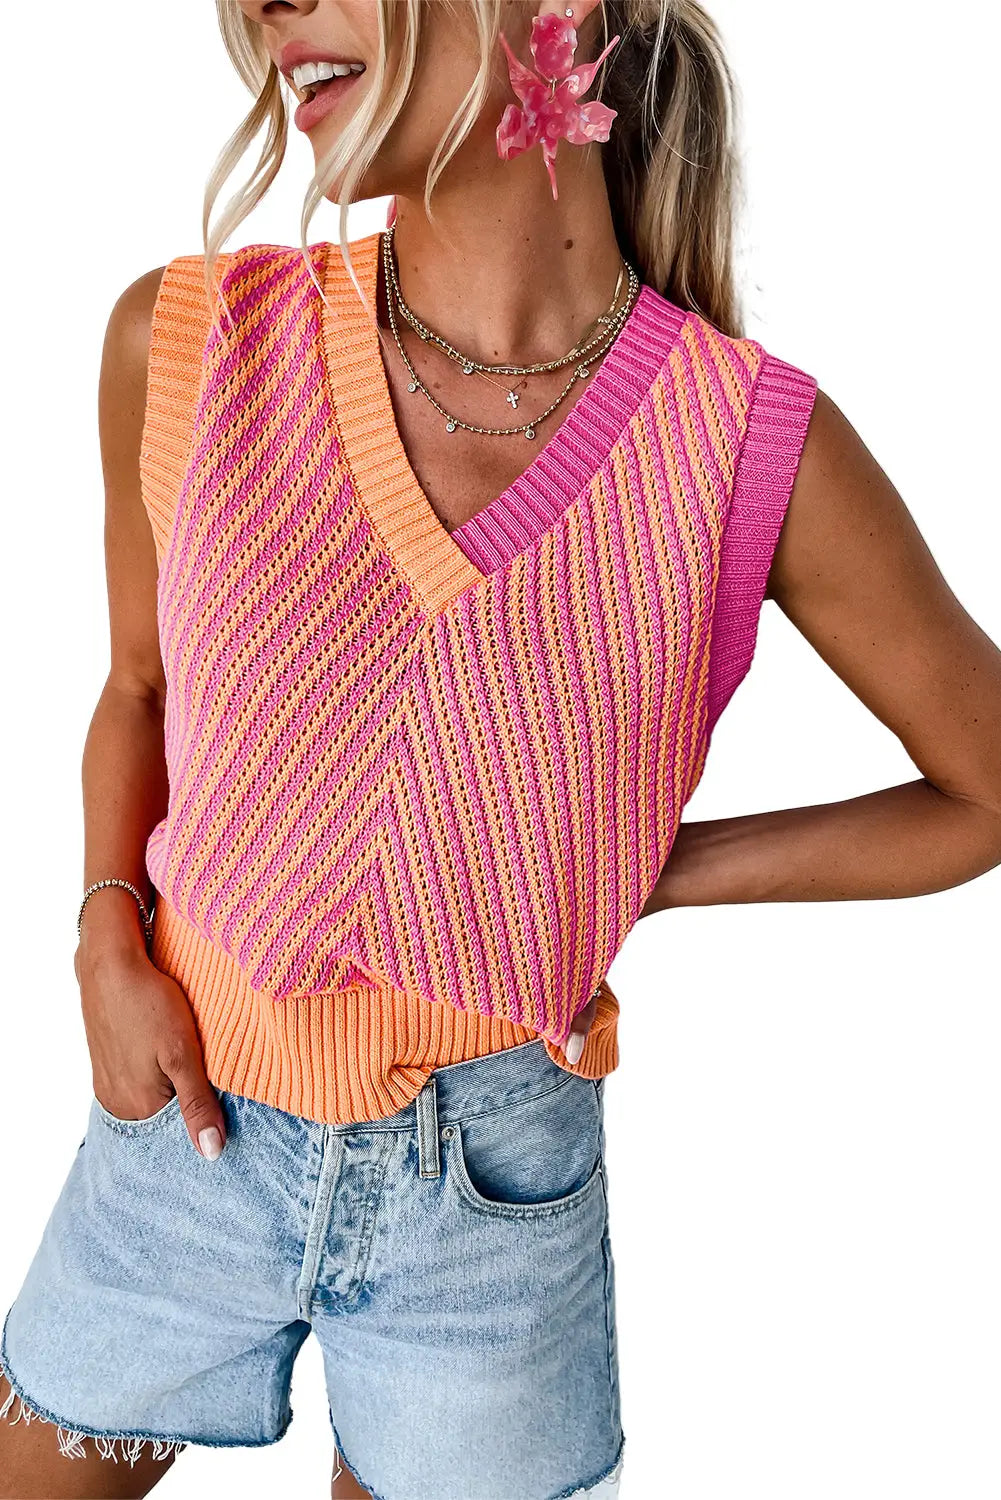 Strawberry pink contrast chevron knit v neck sweater vest - tops